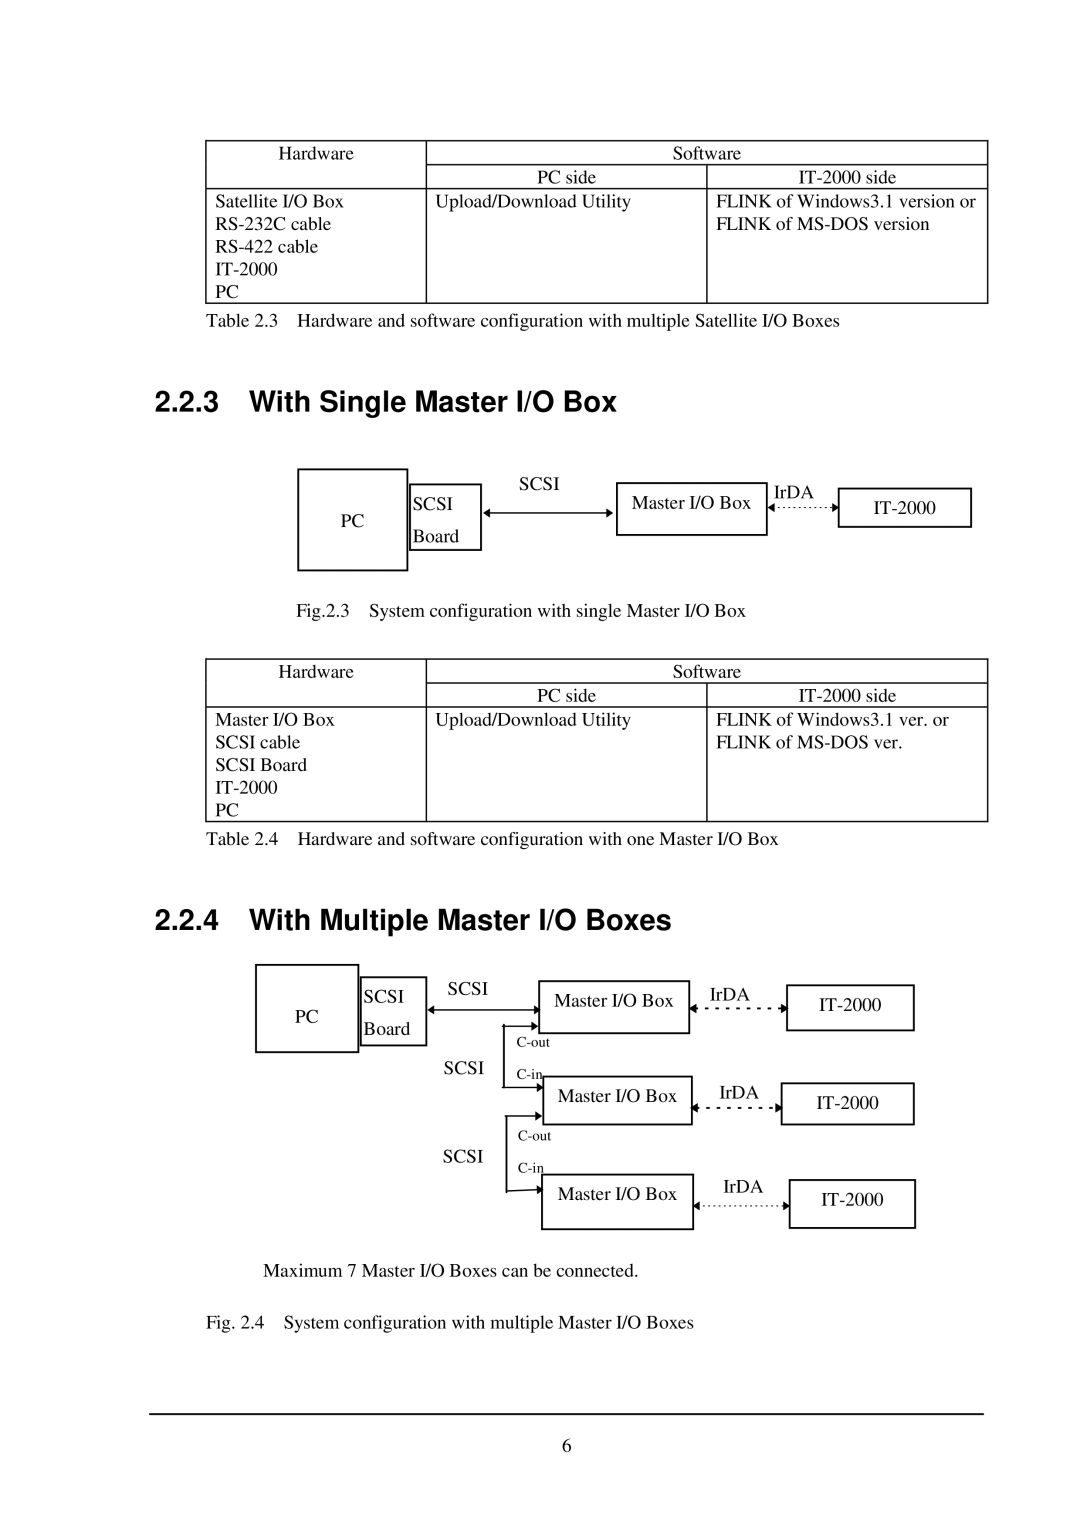 Casio IT-2000 installation manual With Single Master I/O Box, With Multiple Master I/O Boxes 